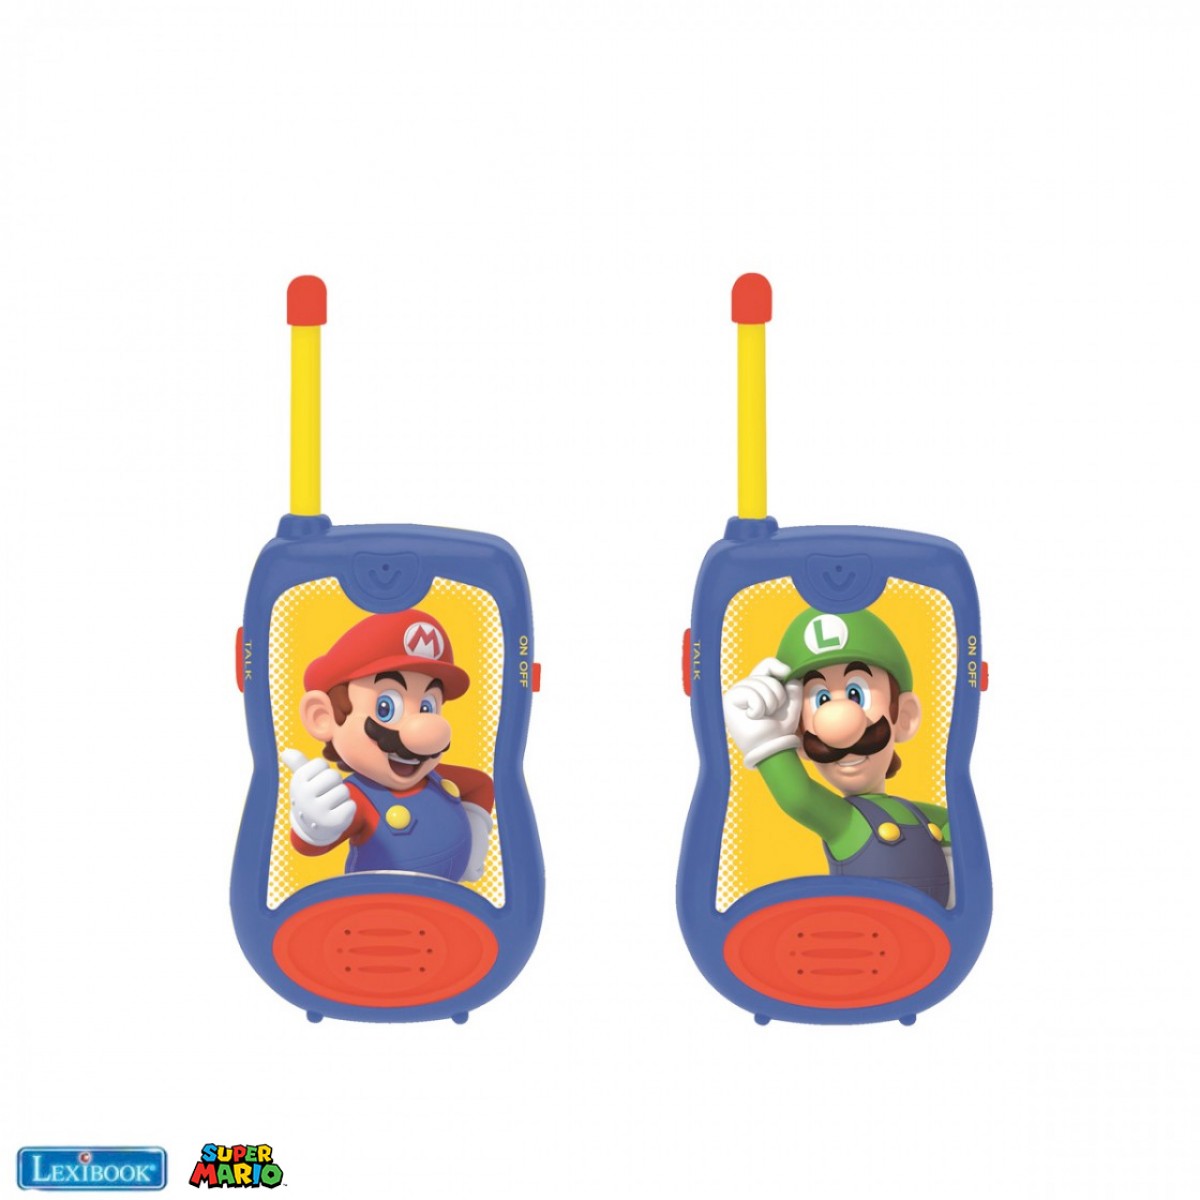 Super Mario Walkie-talkies, communication game for children / boys